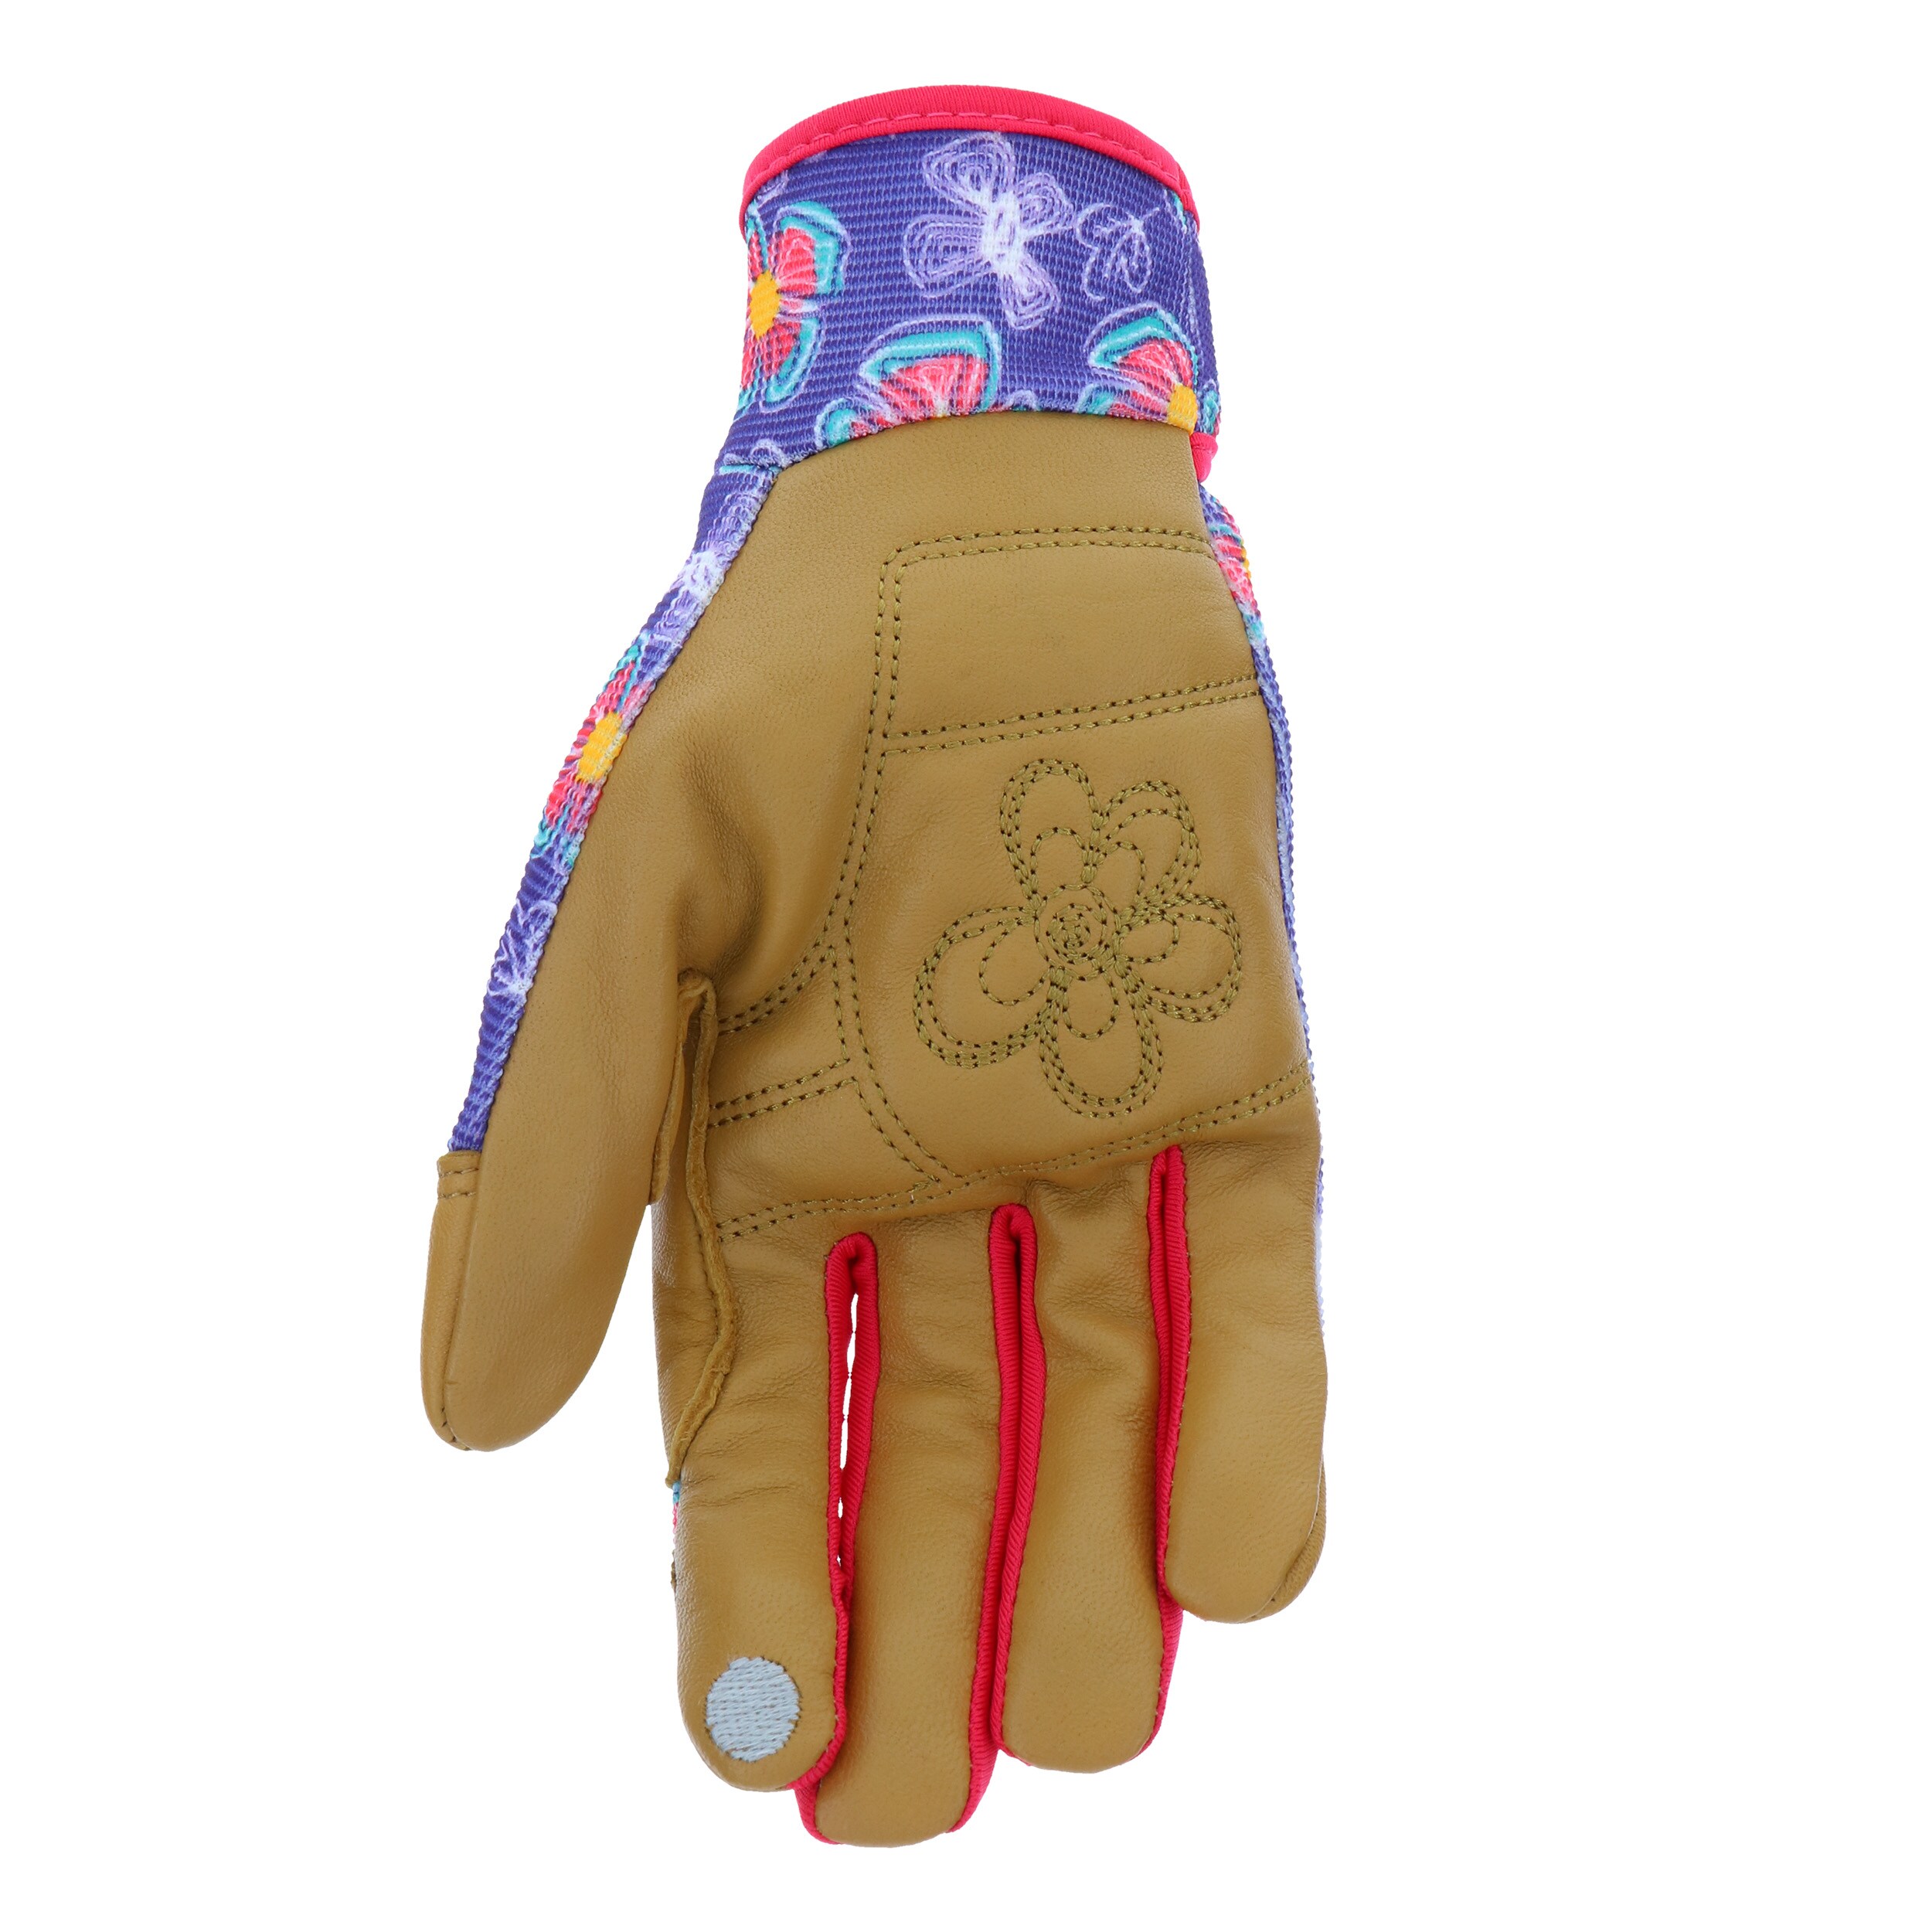 Miracle-Gro Garden Gloves at